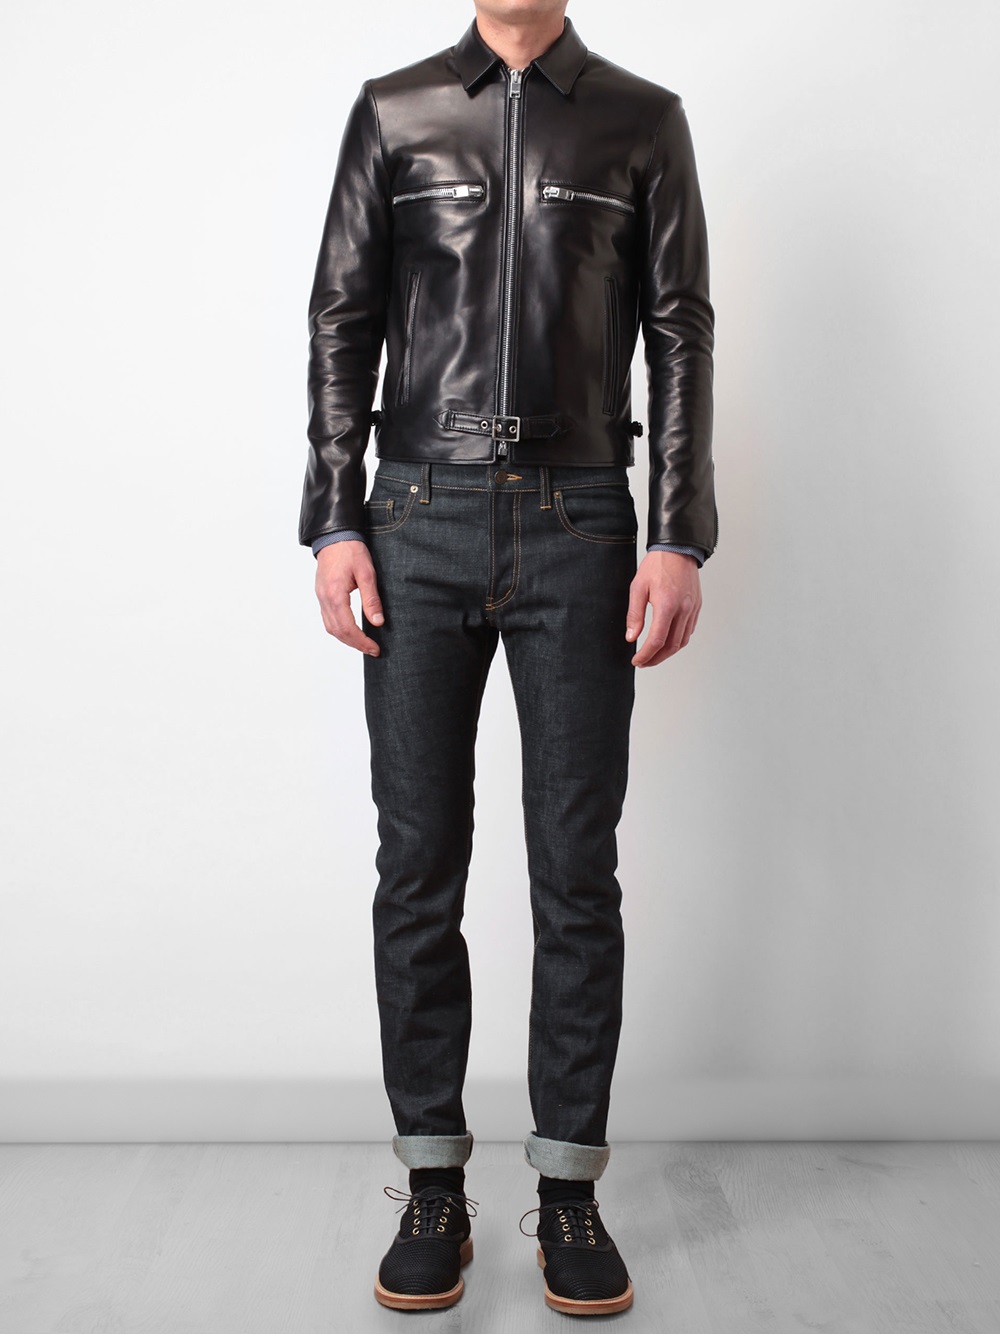 Lyst - Saint Laurent Leather Jacket in Black for Men